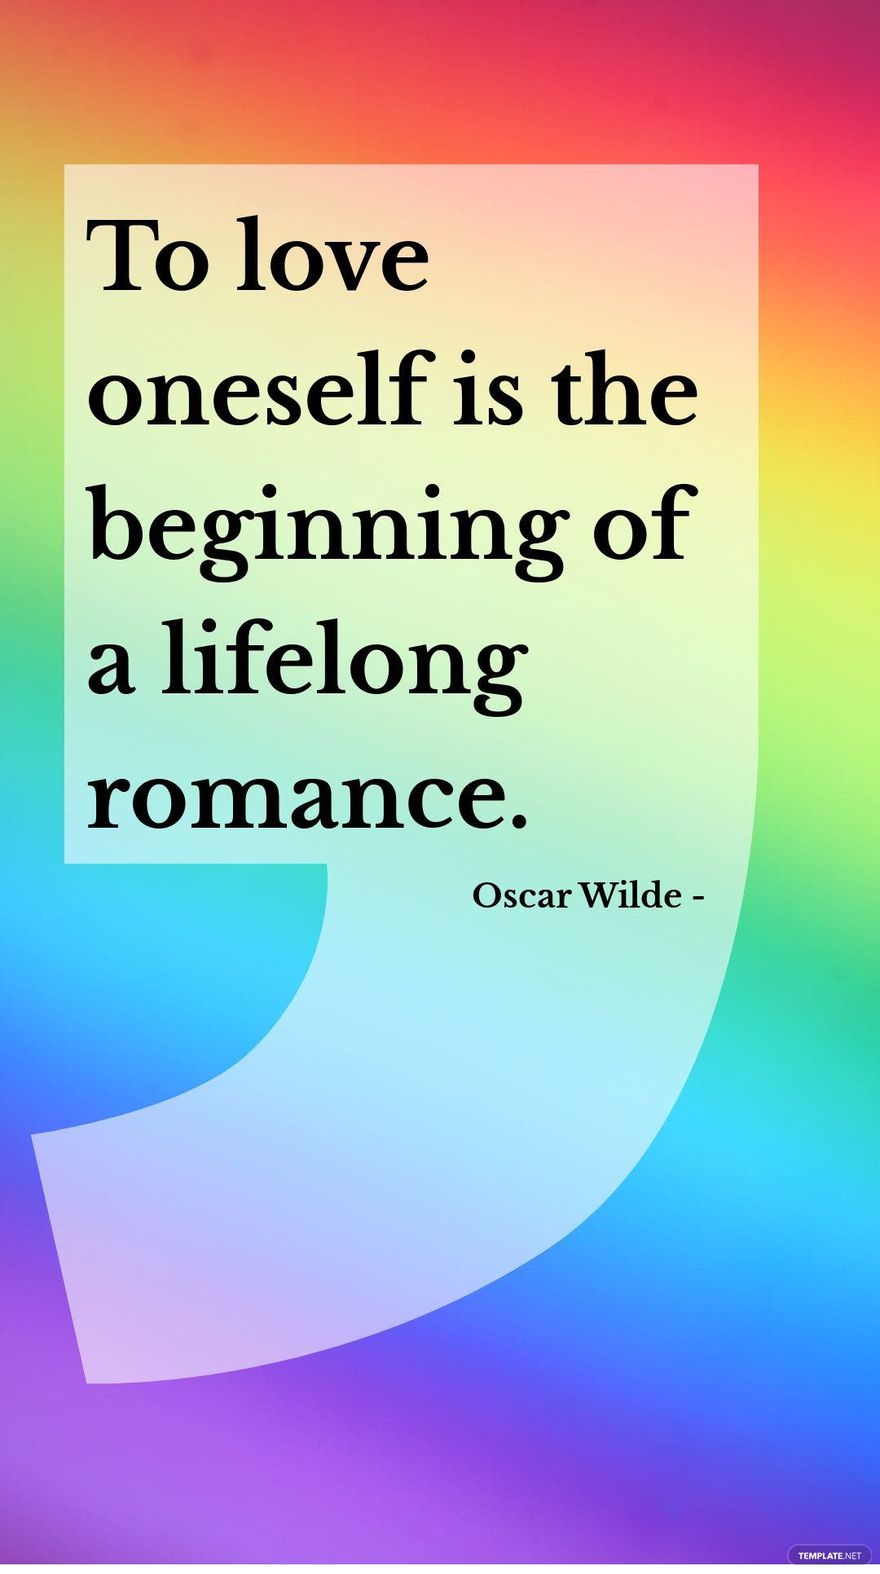 Oscar Wilde - To love oneself is the beginning of a lifelong romance.